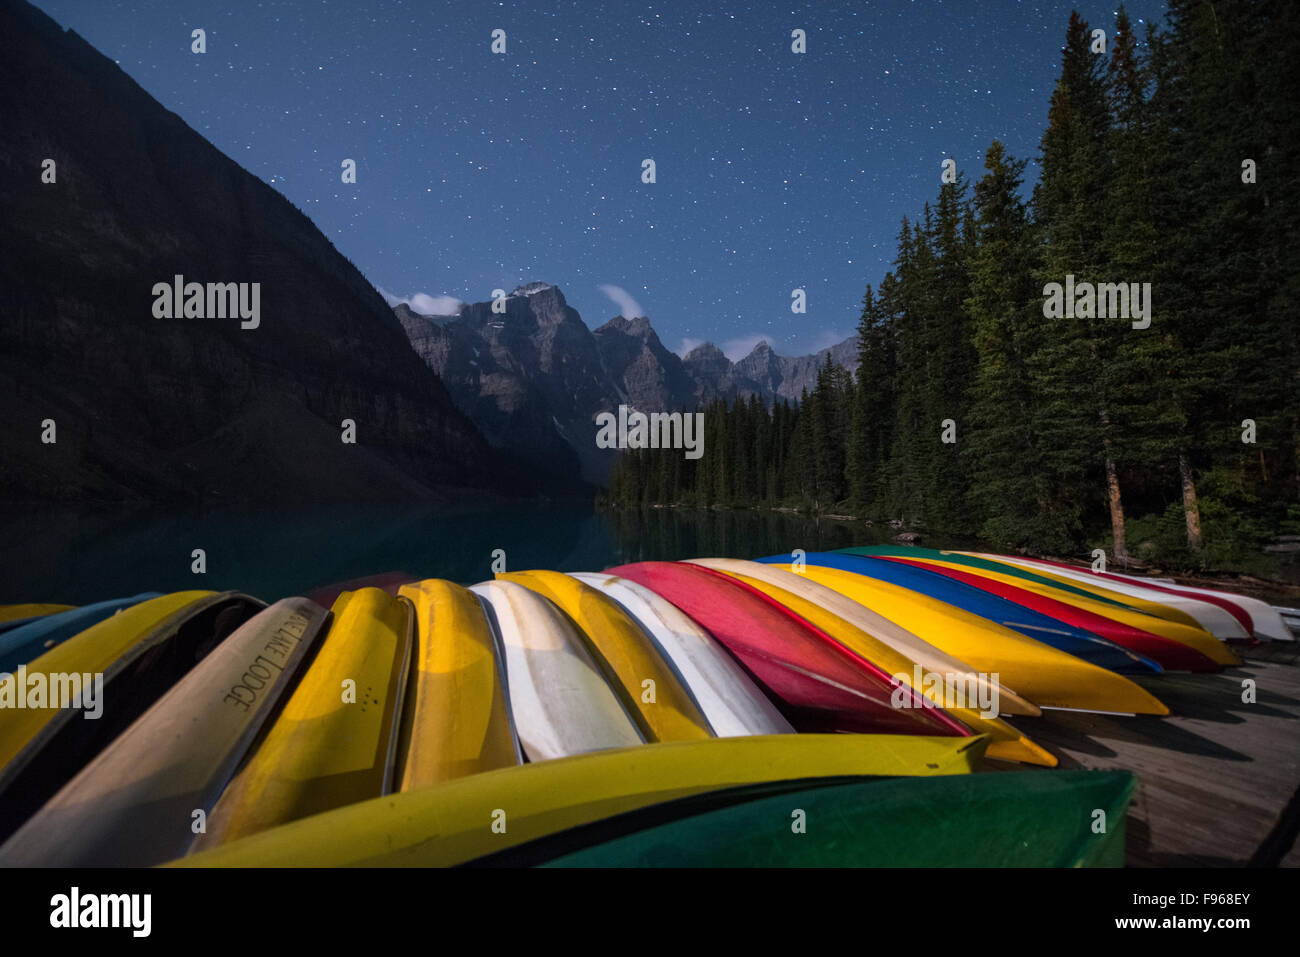 Canoes On Moraine Lake At Night Banff National Park Alberta Canada